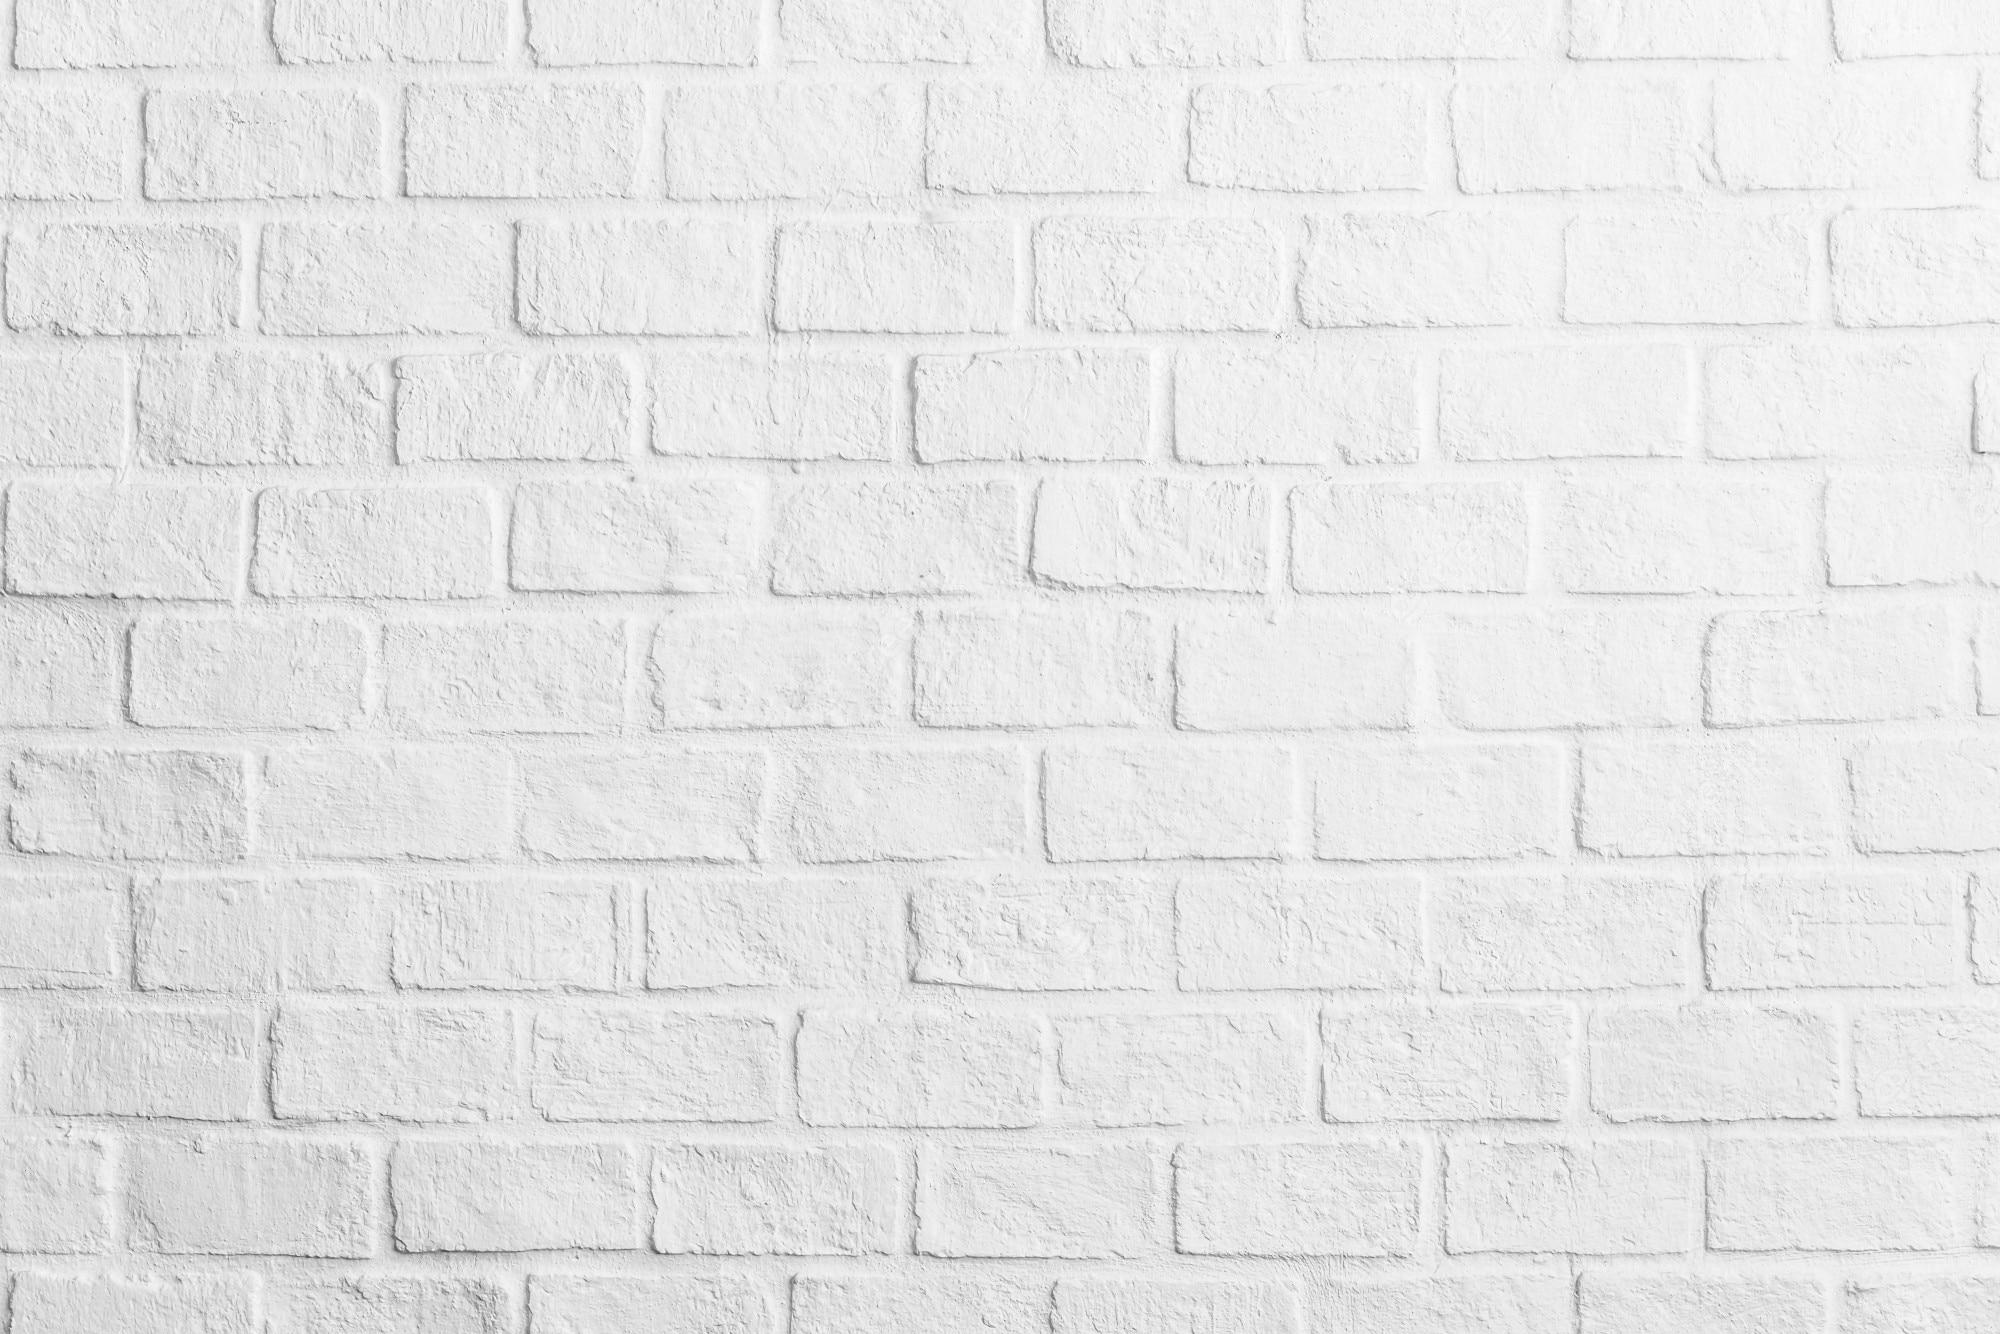 White Brick Wall Images   Free Download on Freepik